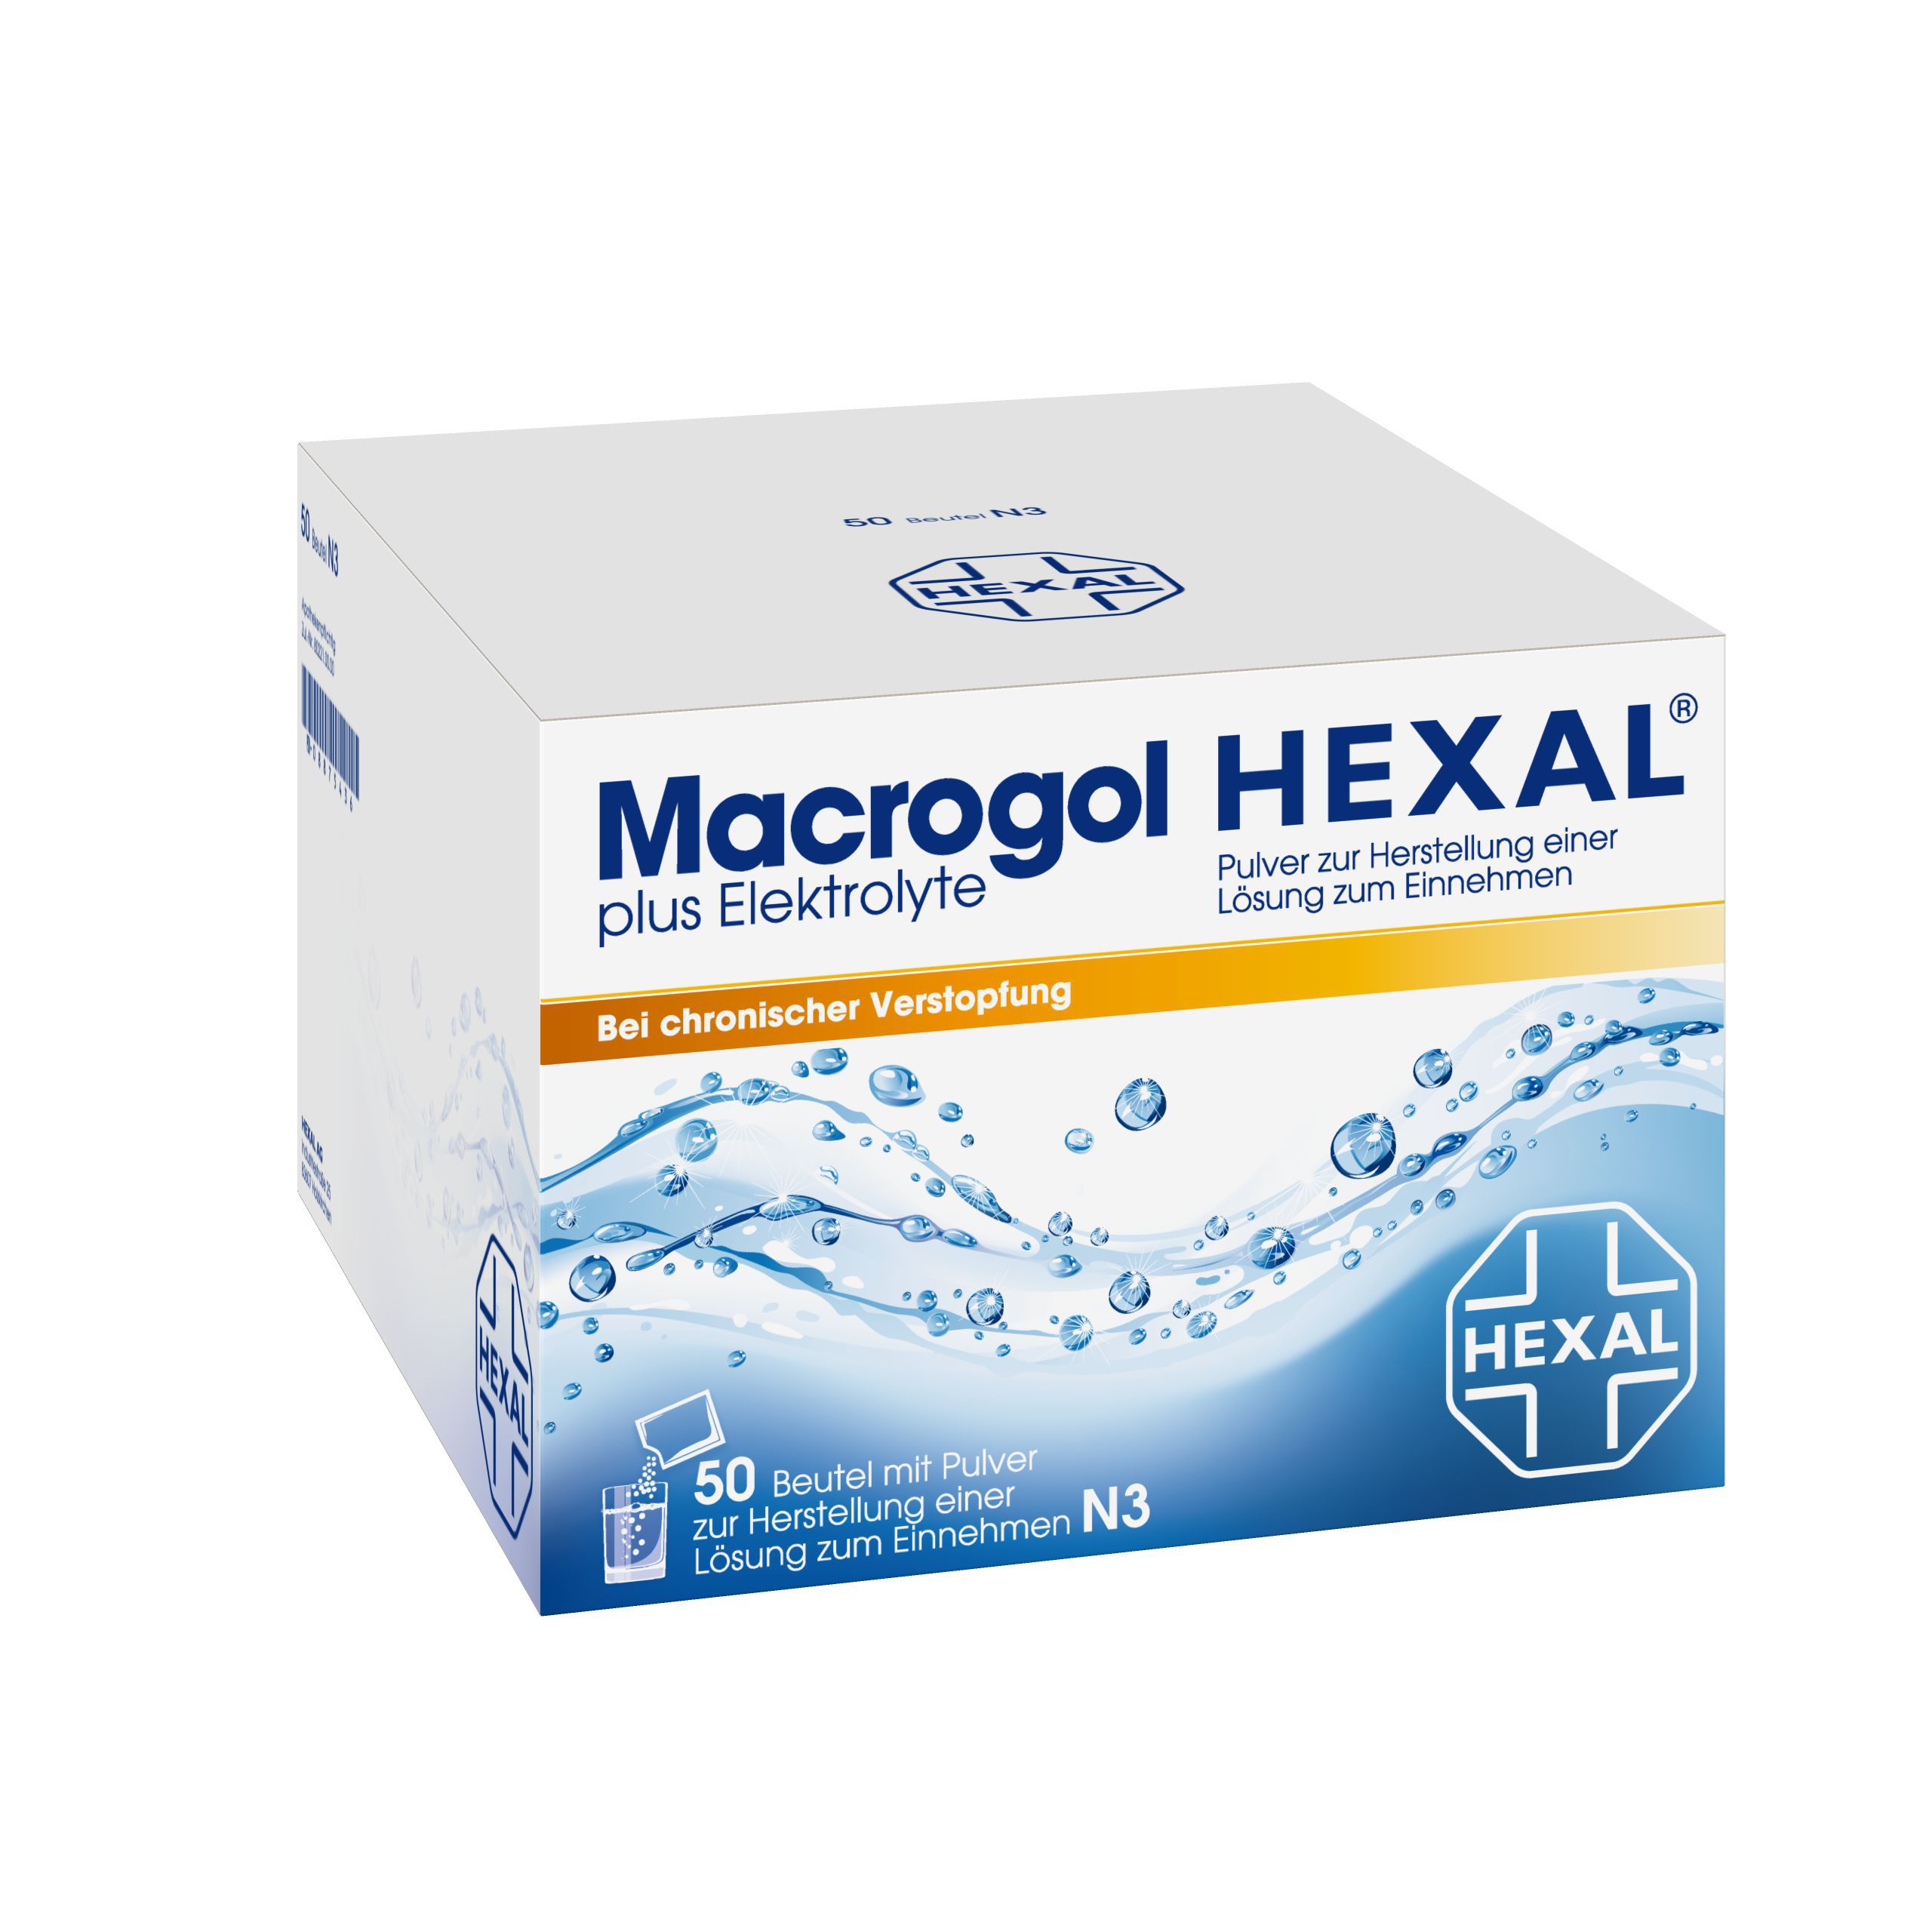 Macrogol Hexal plus Elektrolyte 100stk